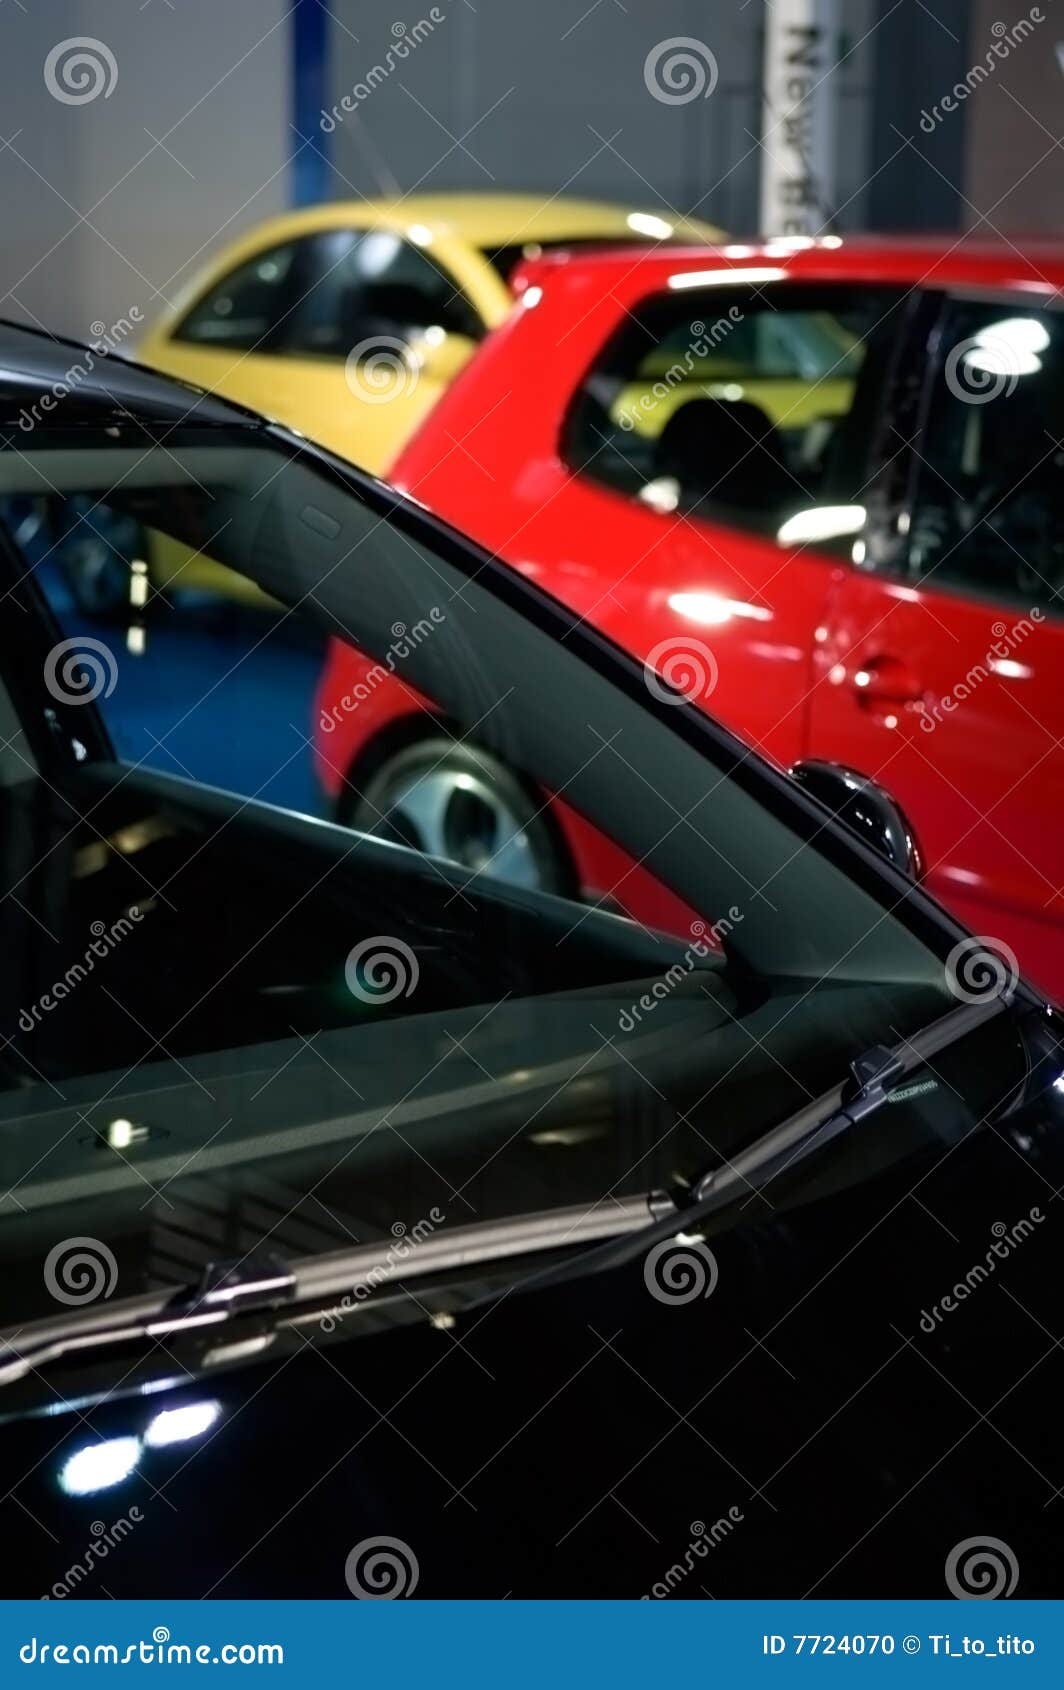 Car windshield wiper stock photo. Image of modern, shine - 7724070